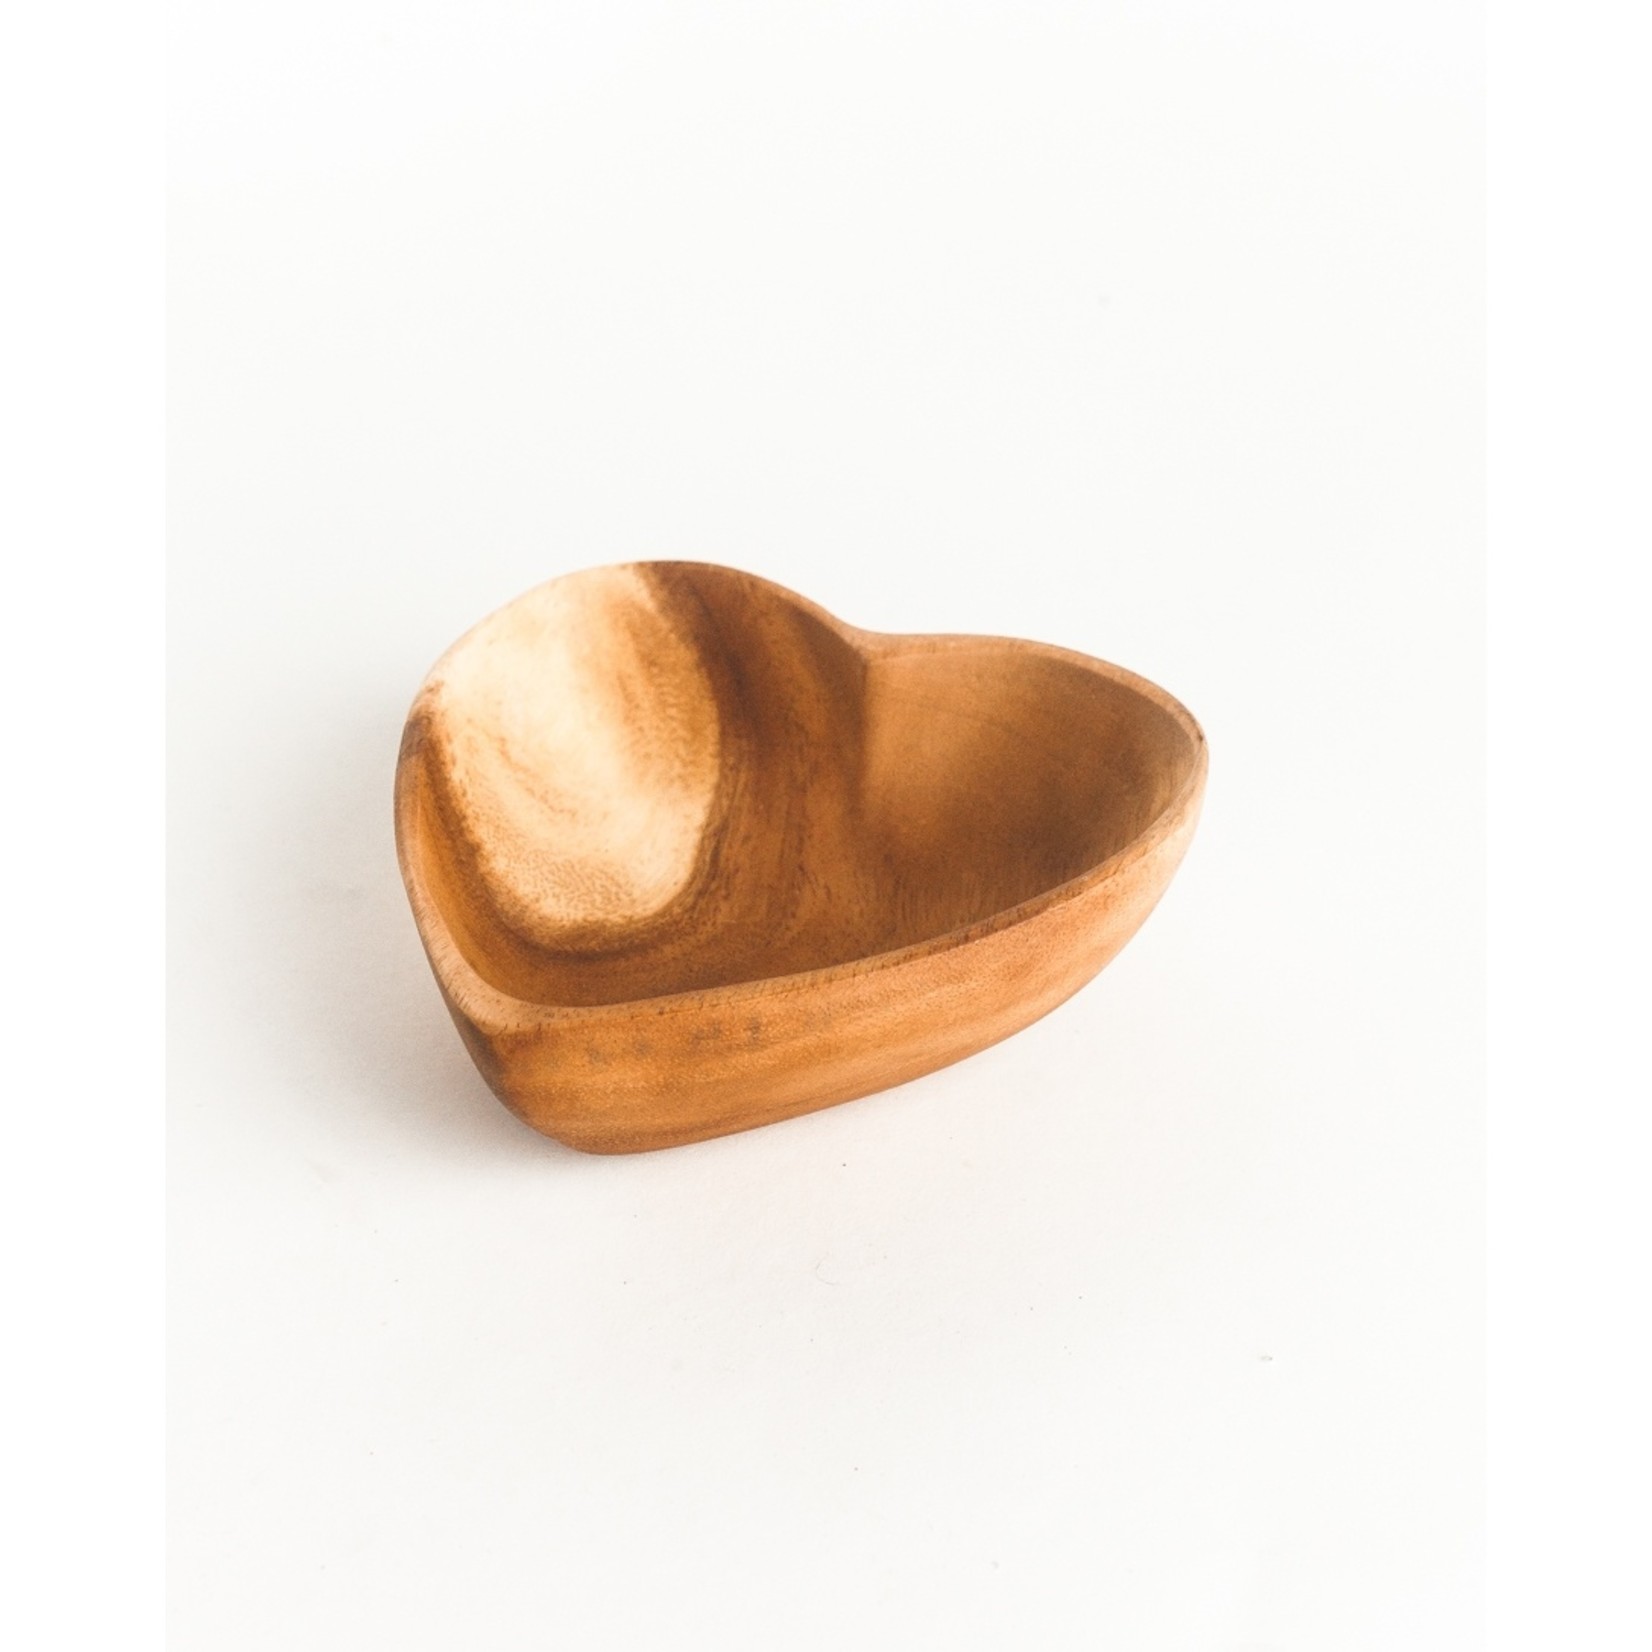 Creative Women Heart Bowl in Wood